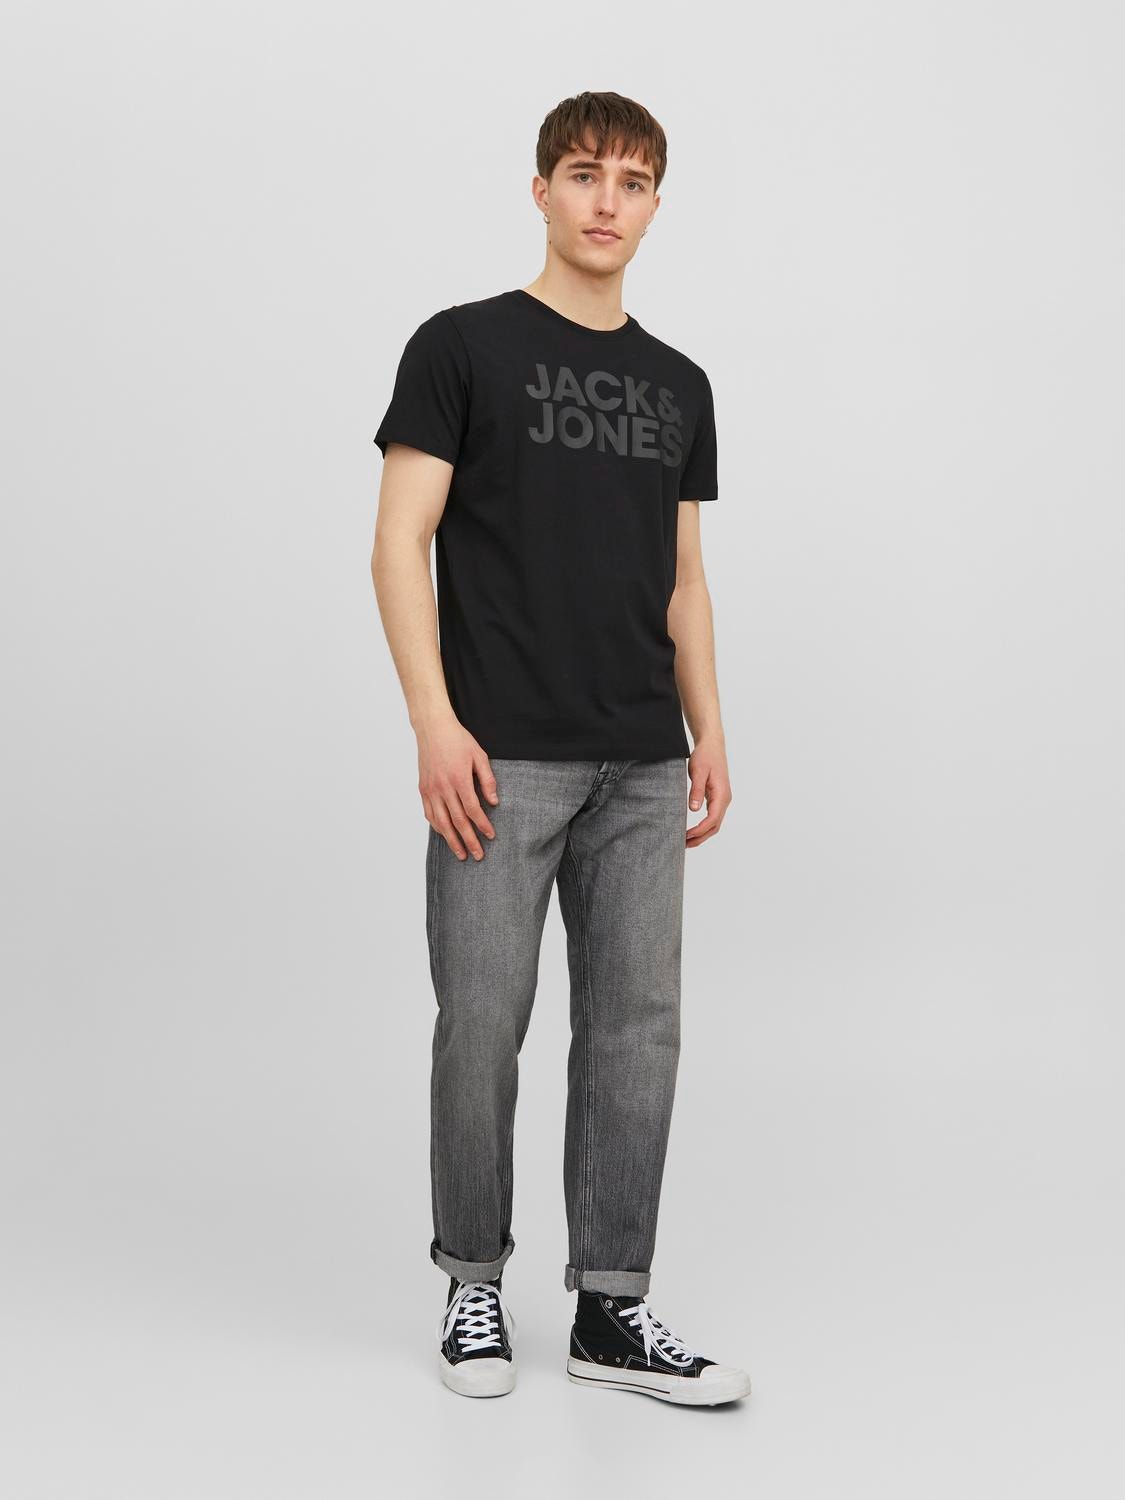 Jack & Jones Logo Ronde hals T-shirt -Black - 12151955